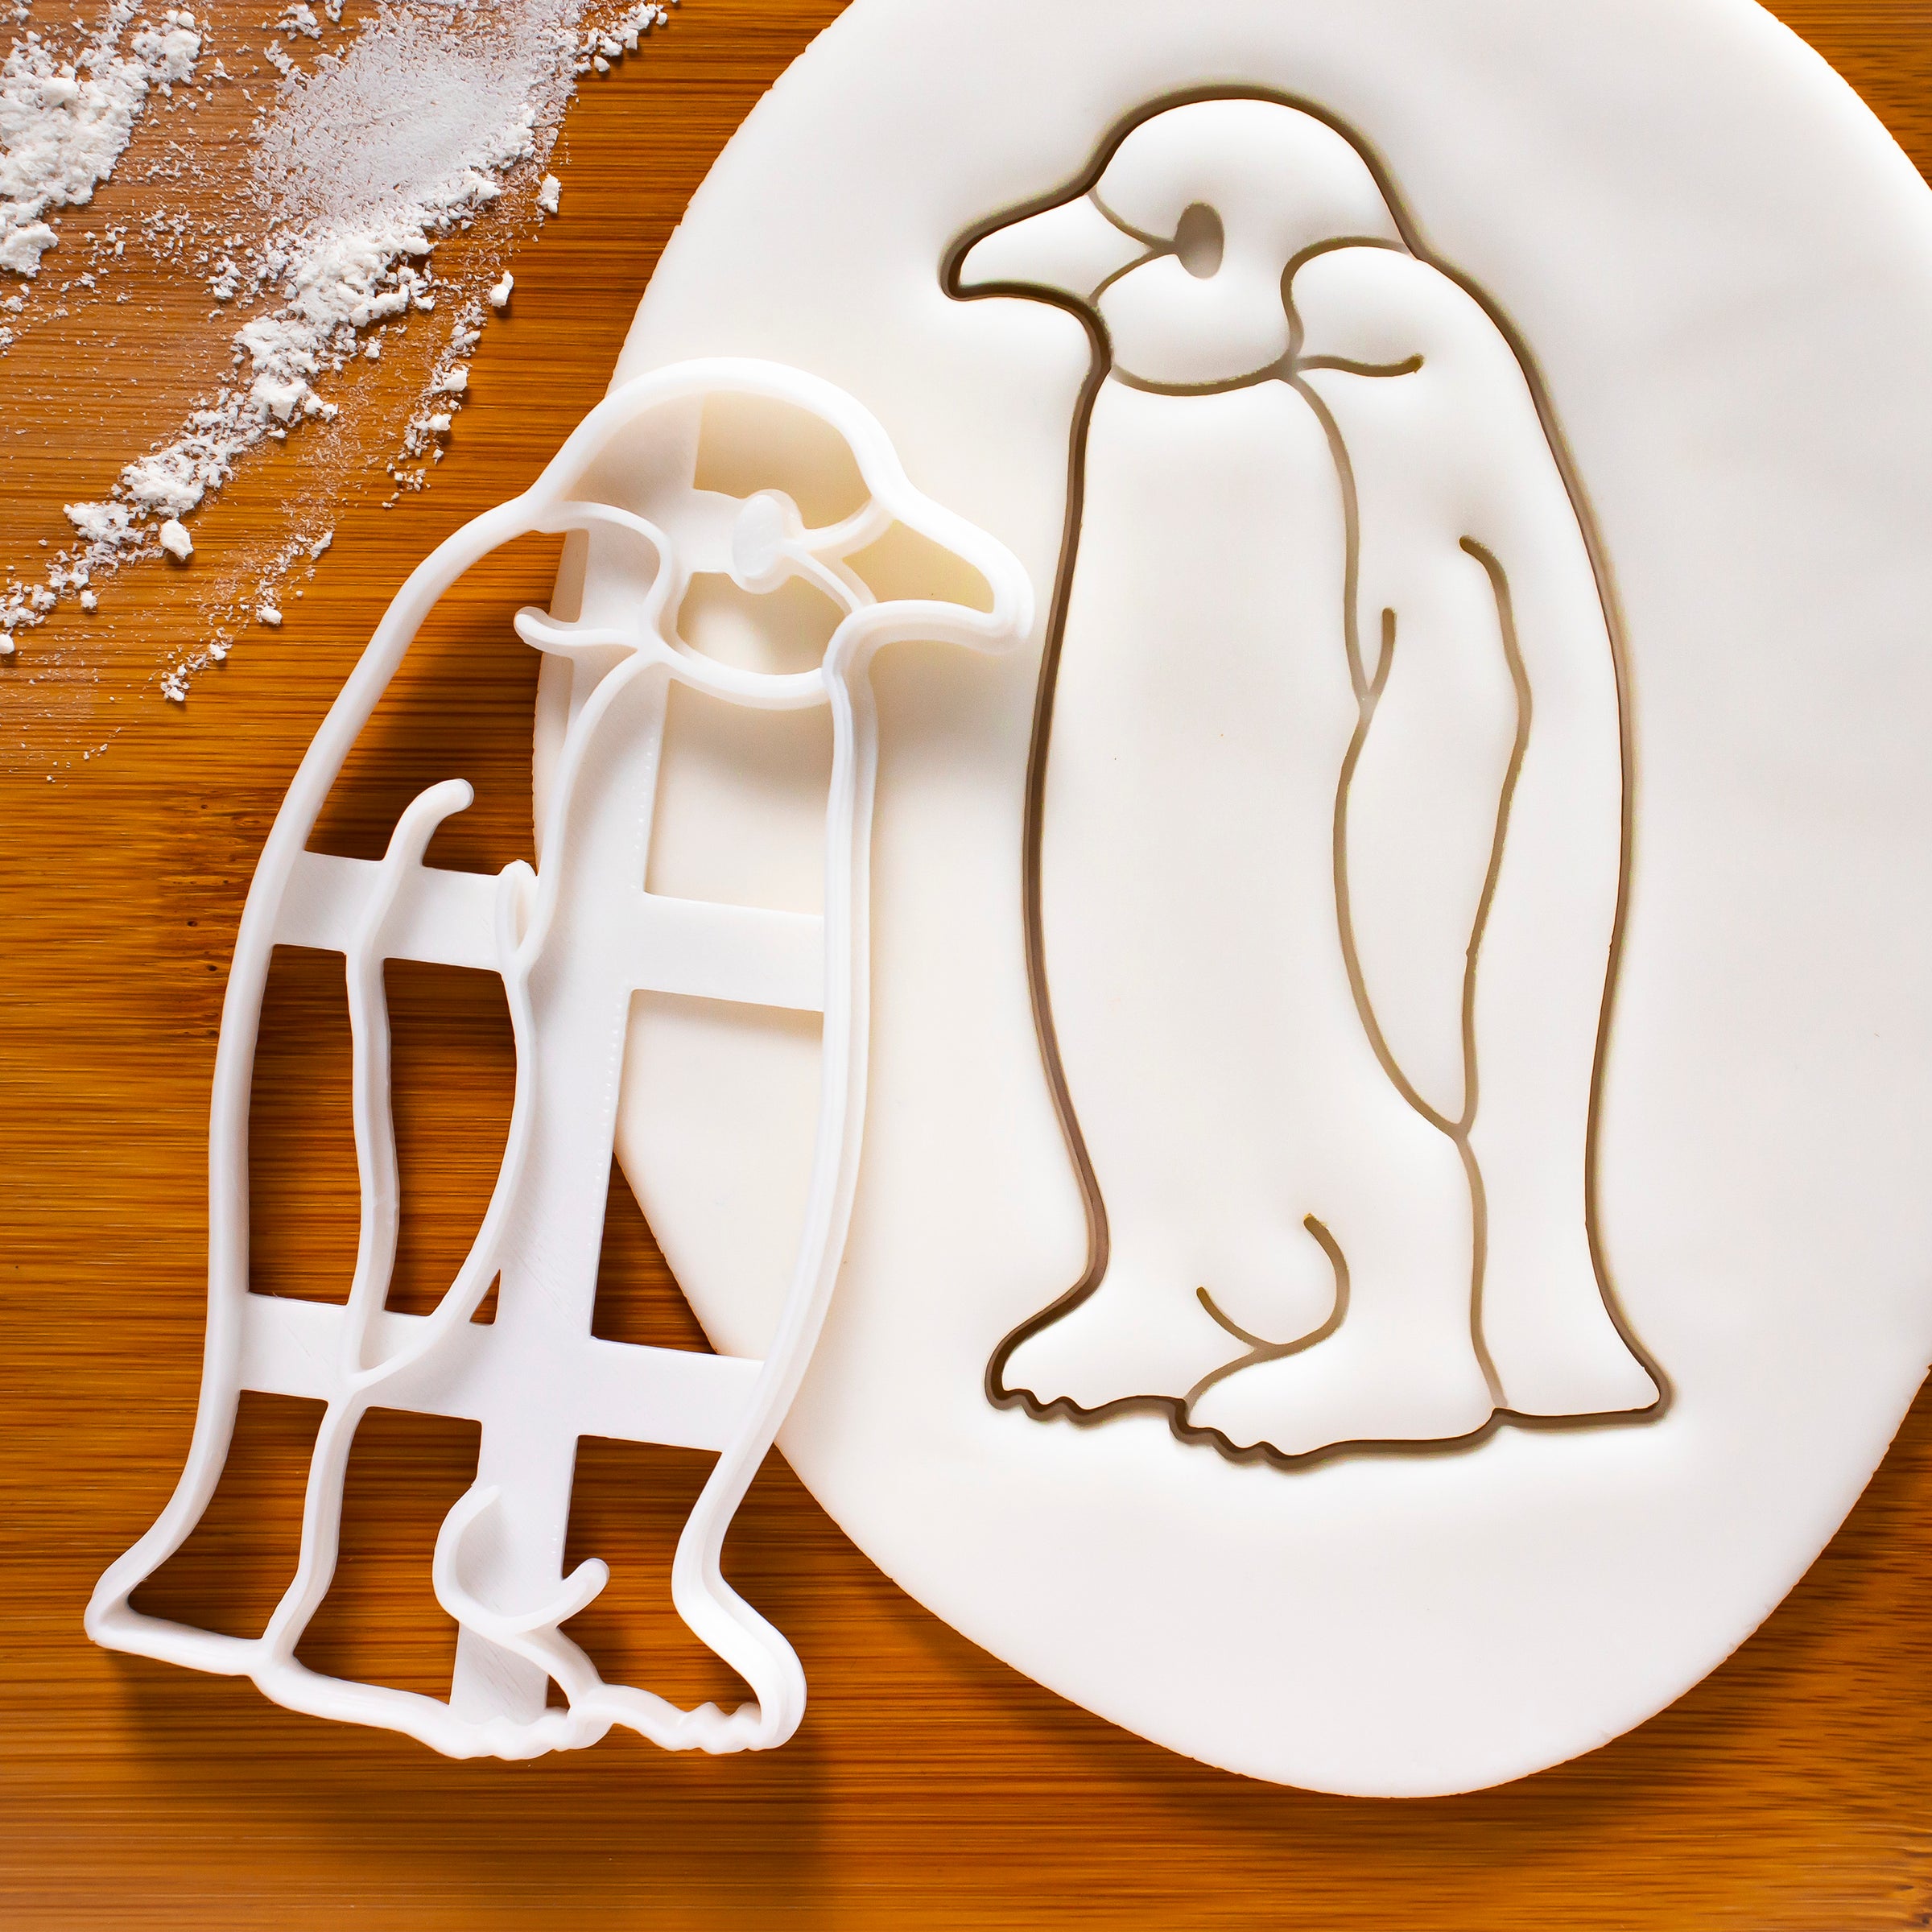 Emperor Penguin Cookie Cutter